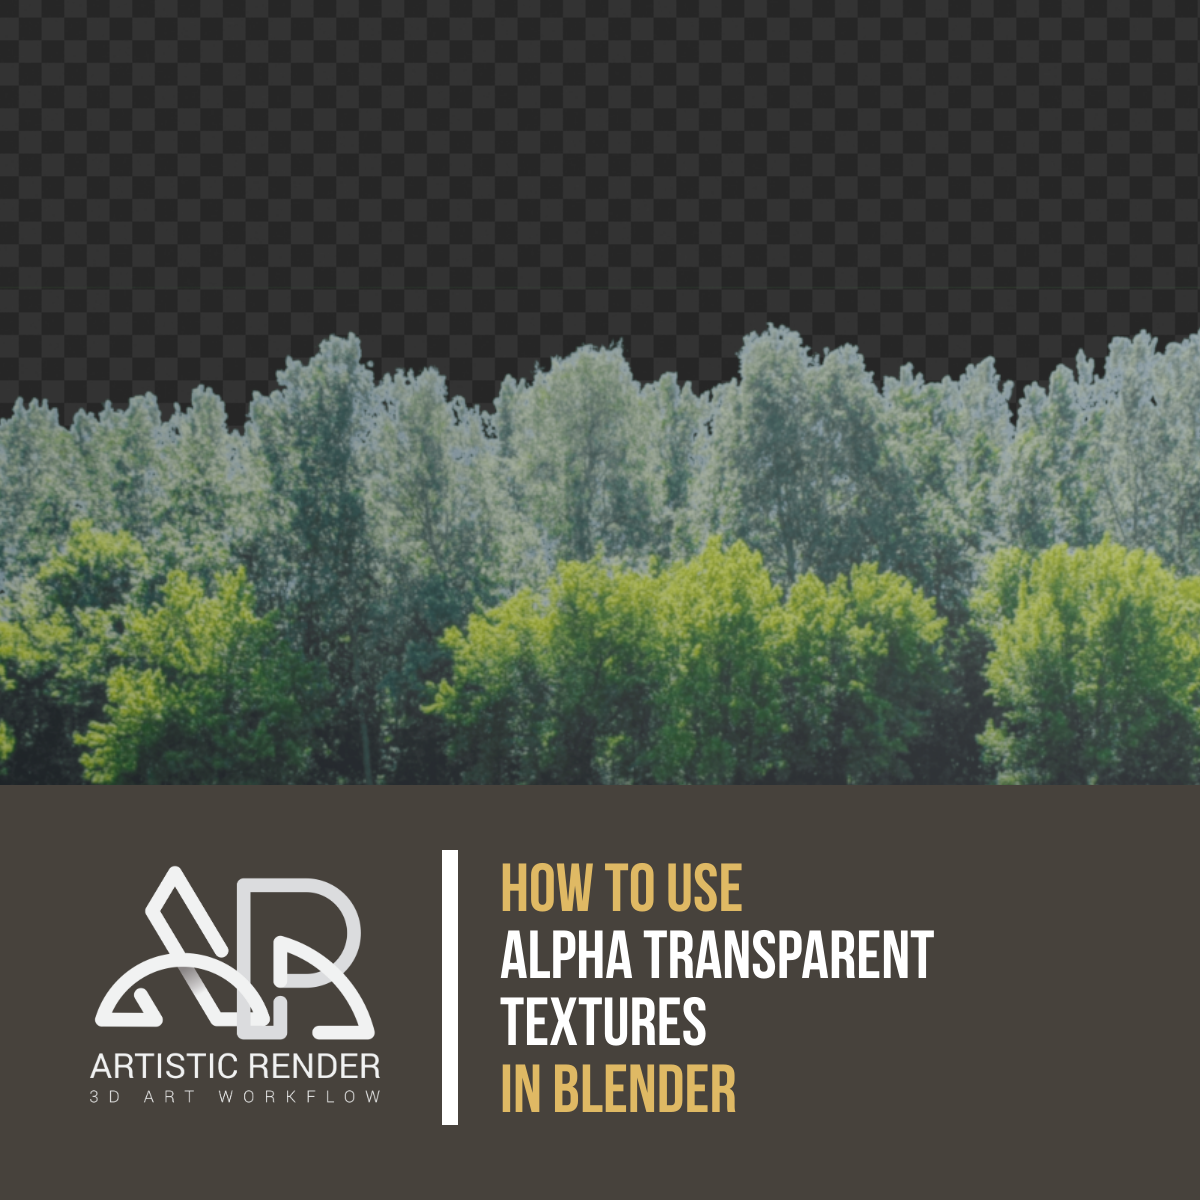 https://artisticrender.com/wp-content/uploads/2020/07/alpha_transparent_textures-1200x1200-feature.png